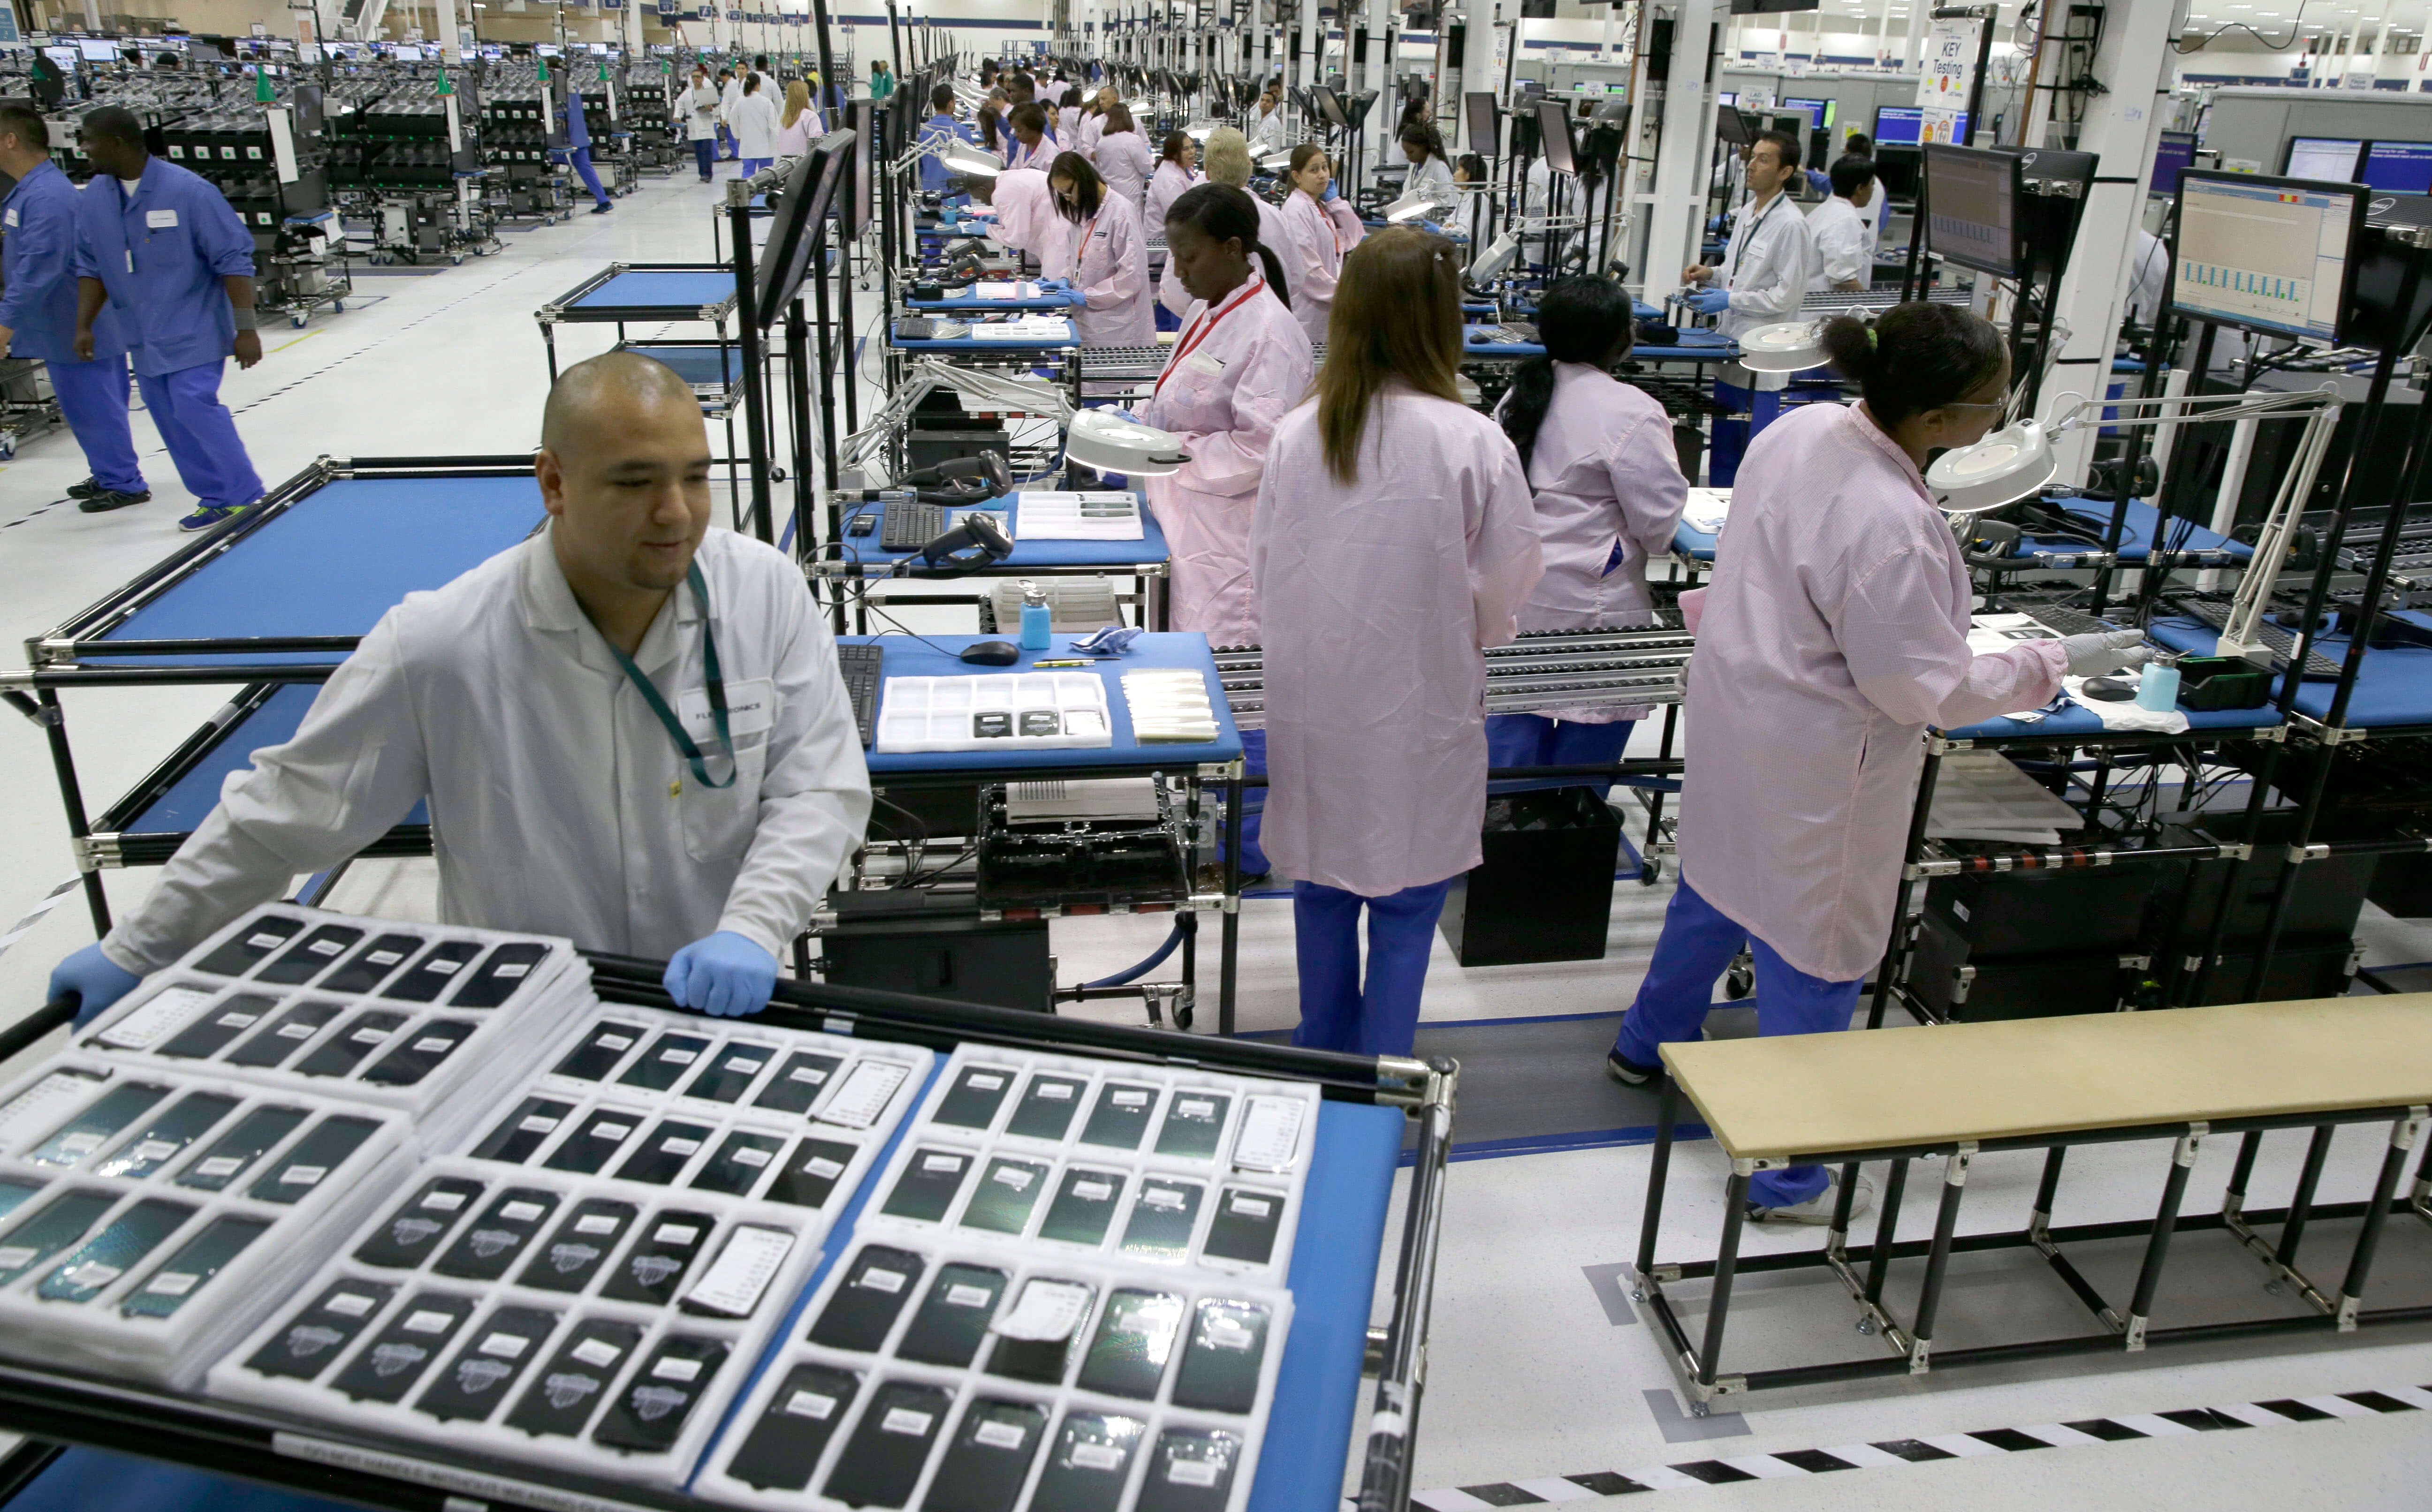 Завод Эппл. Foxconn Factory. Завод Apple в Китае. Производство смартфонов.